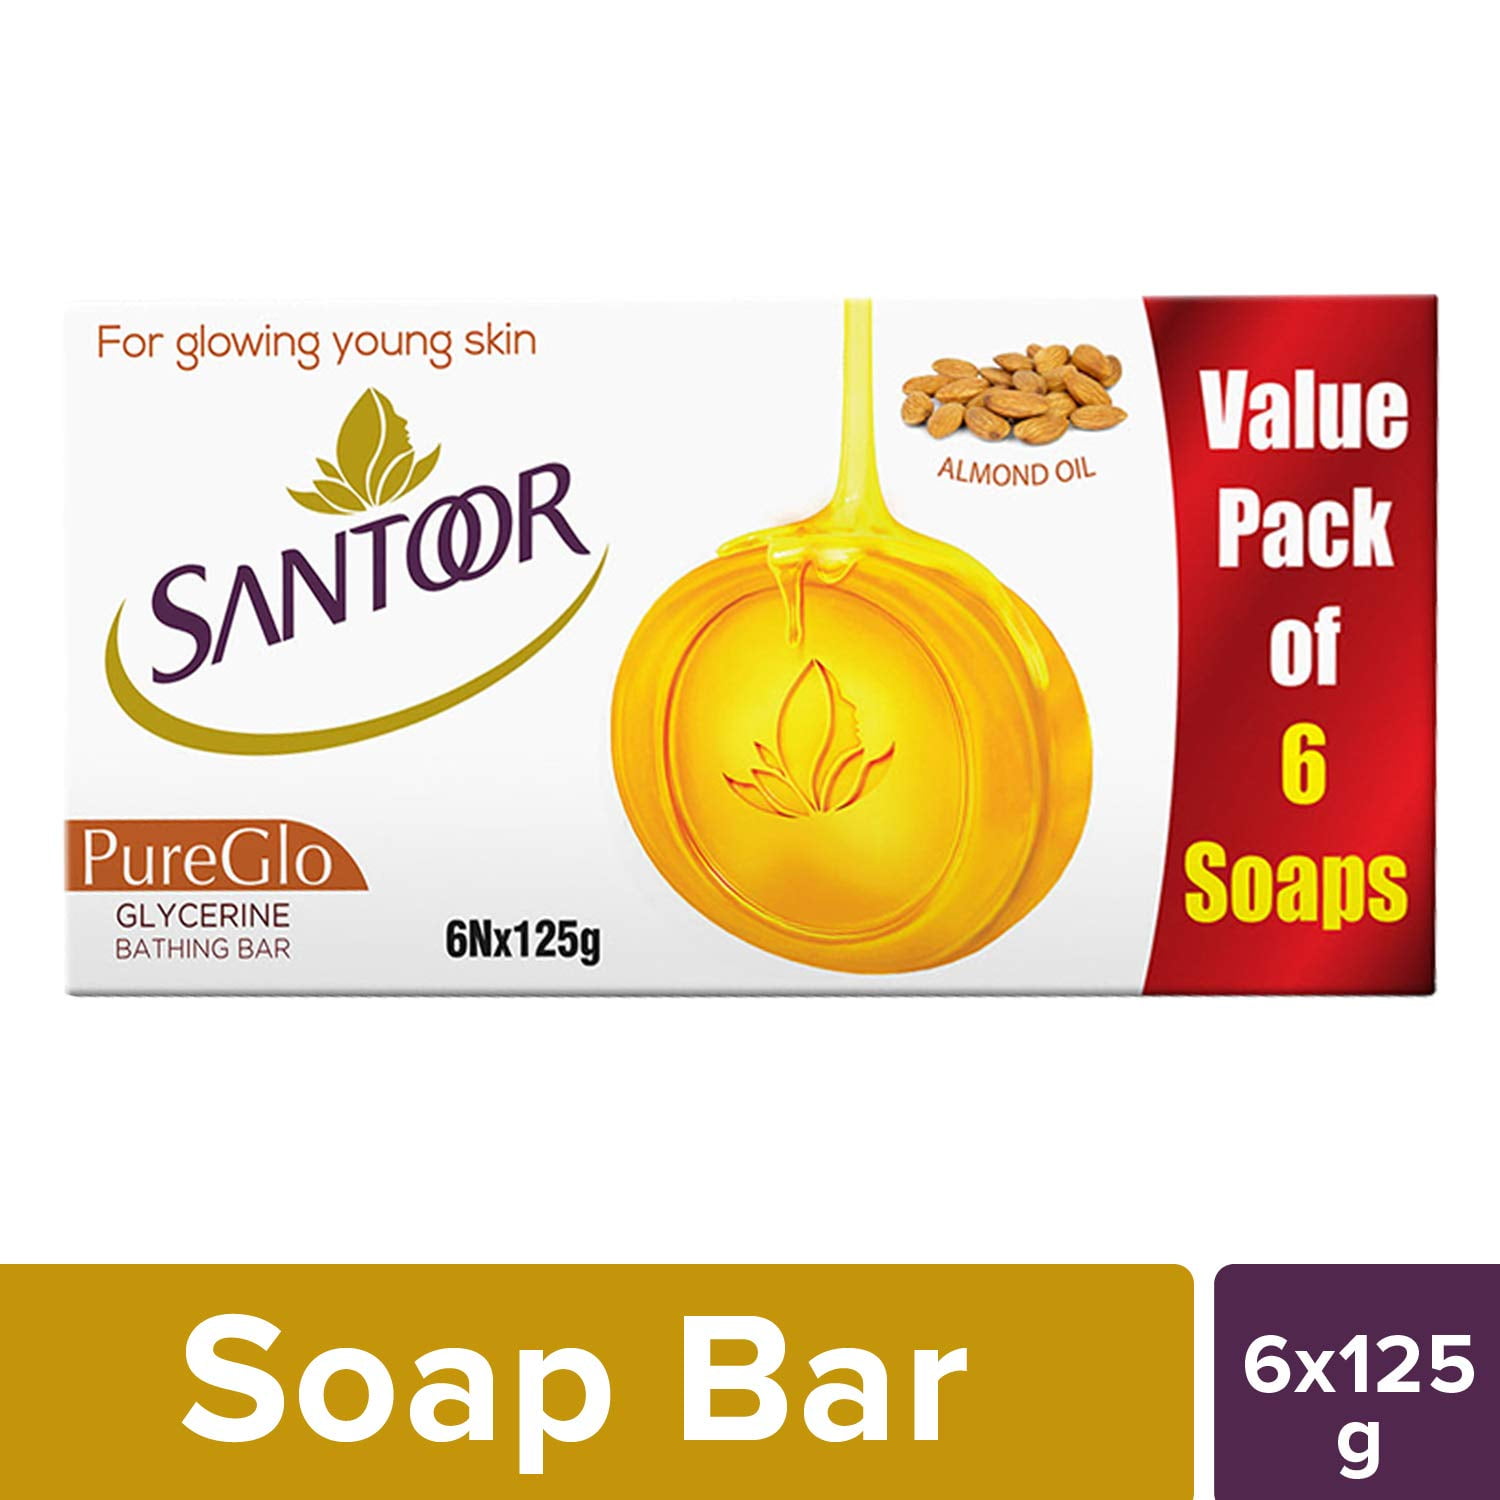 Santoor Glycerine PureGlo Soap 125g 